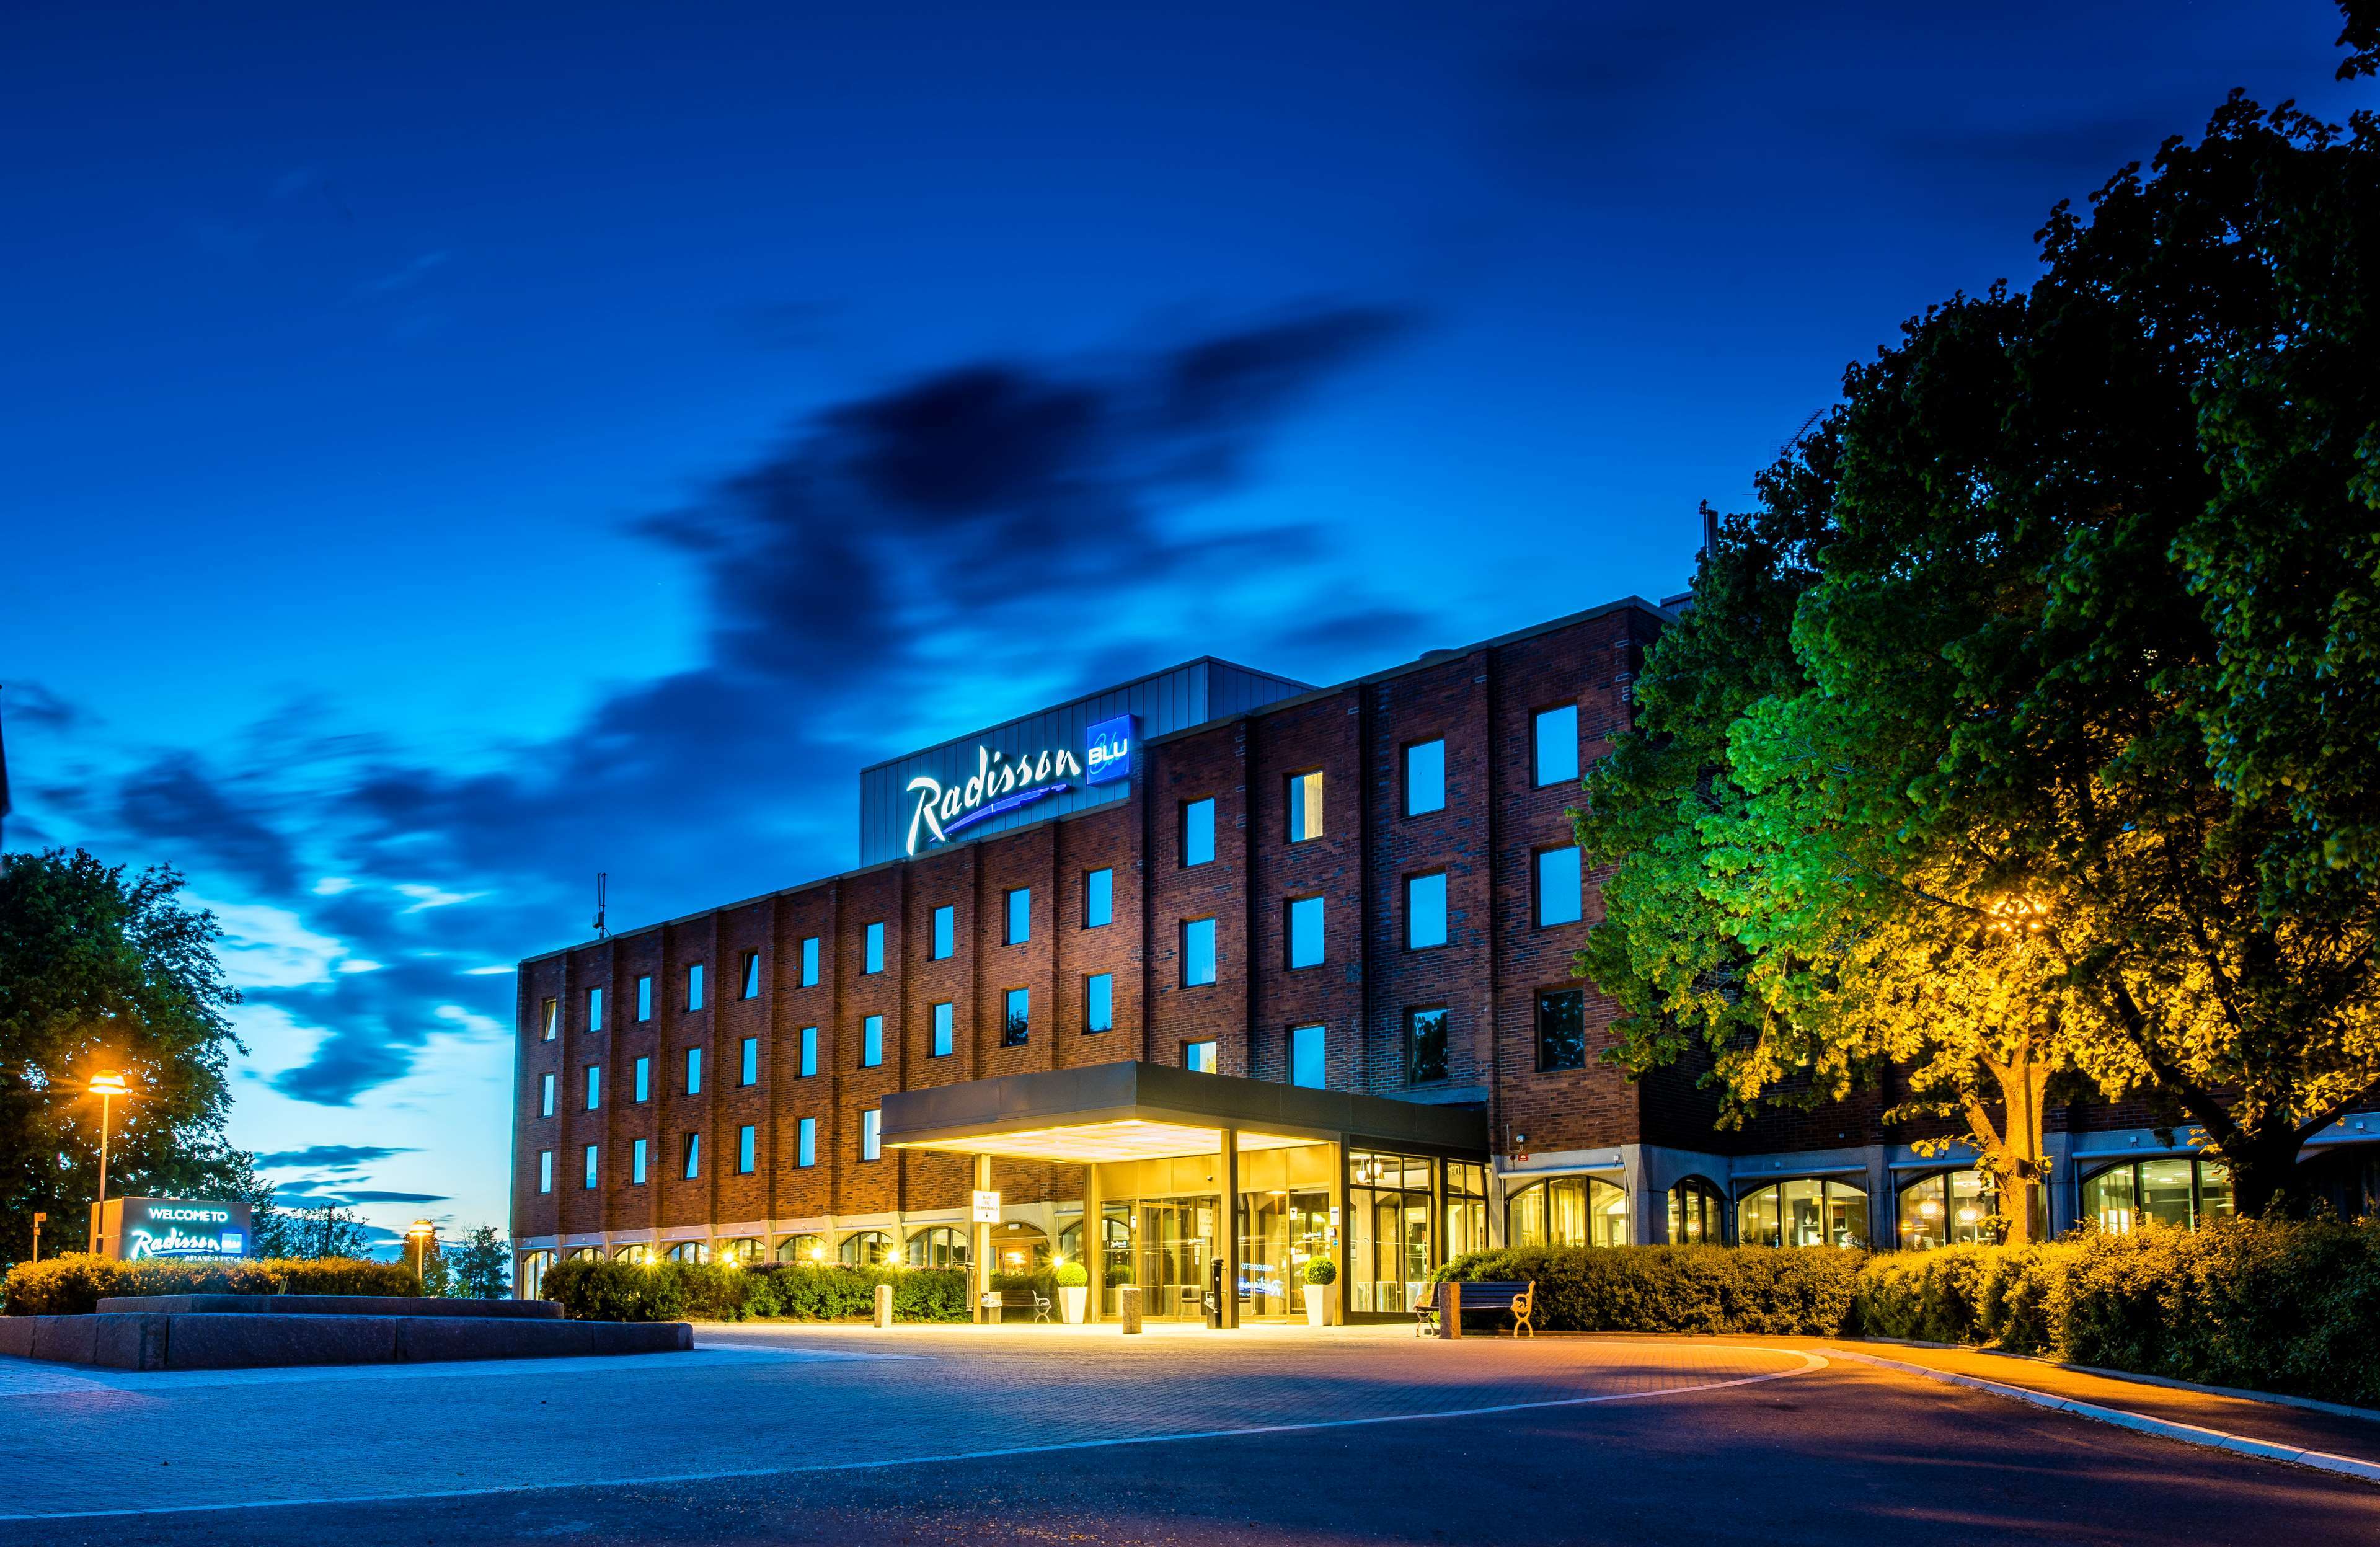 Radisson Blu Arlandia Hotel, Stockholm-Arlanda Hotell, Sigtuna - 6